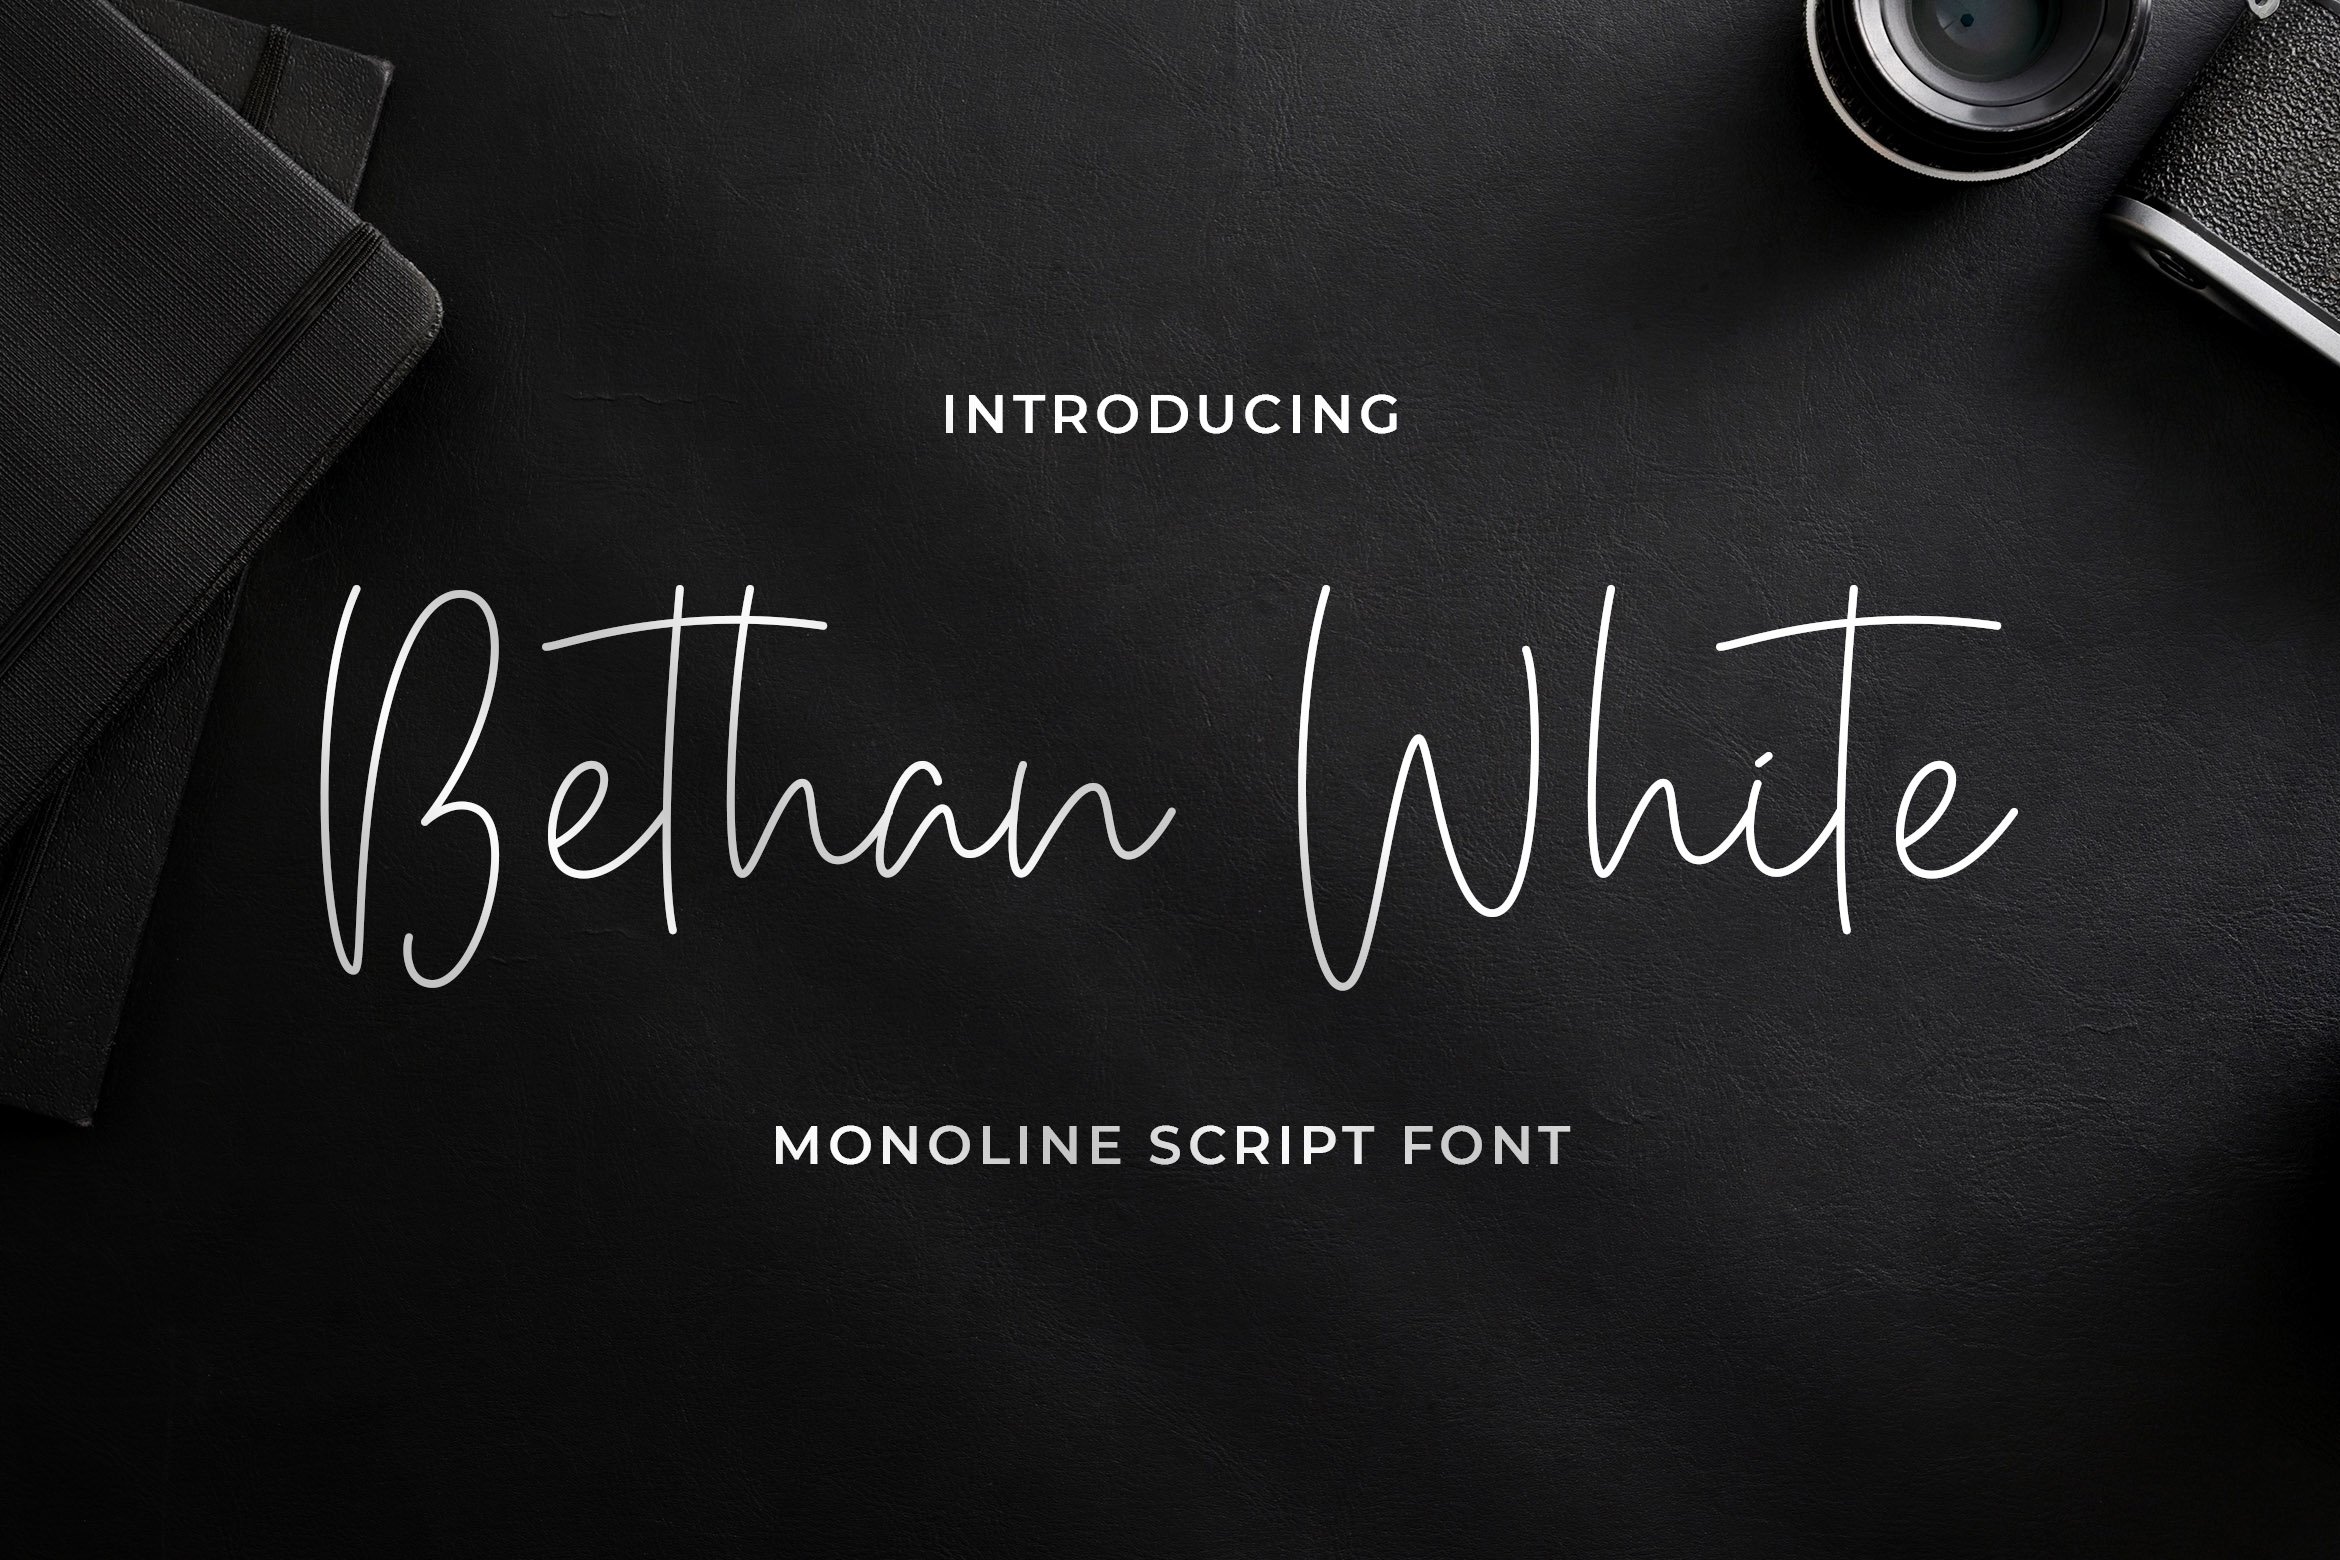 Bethan White - Monoline Script Font cover image.